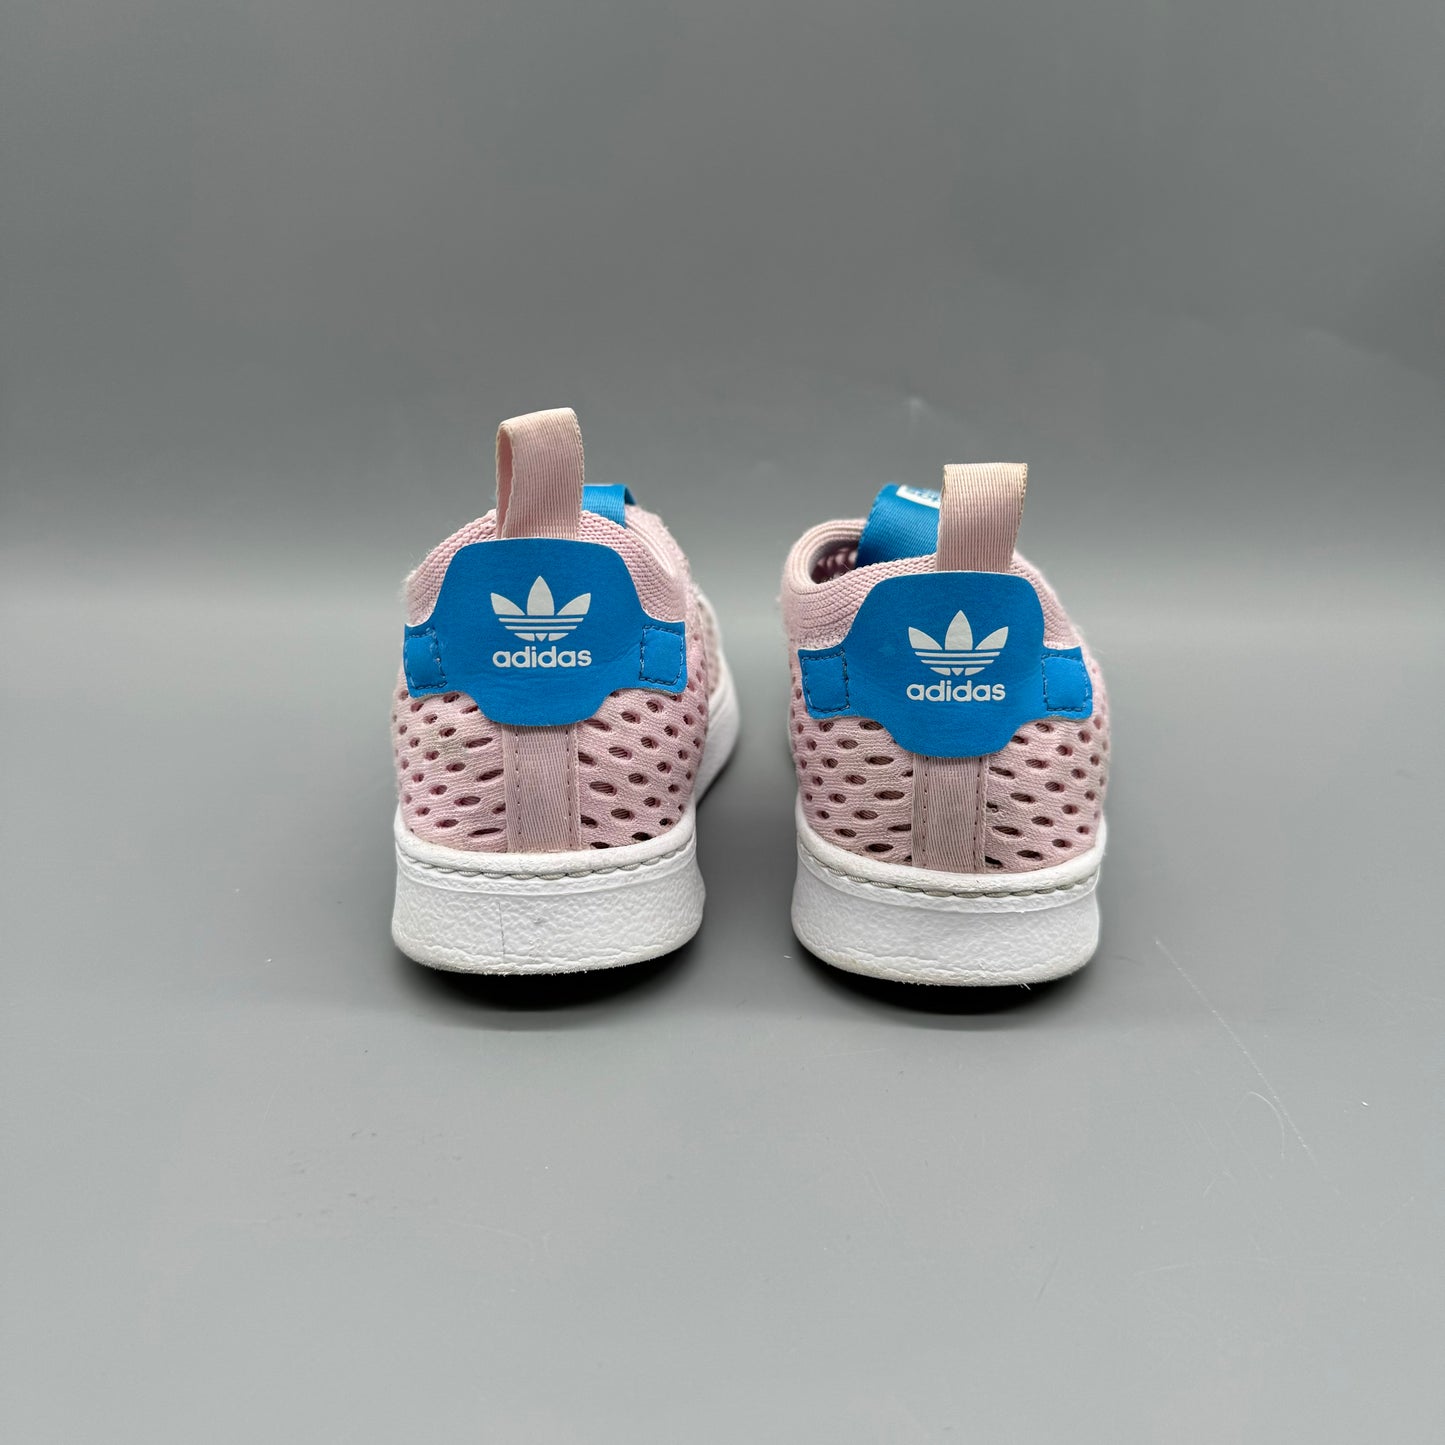 Adidas / Runner / US7